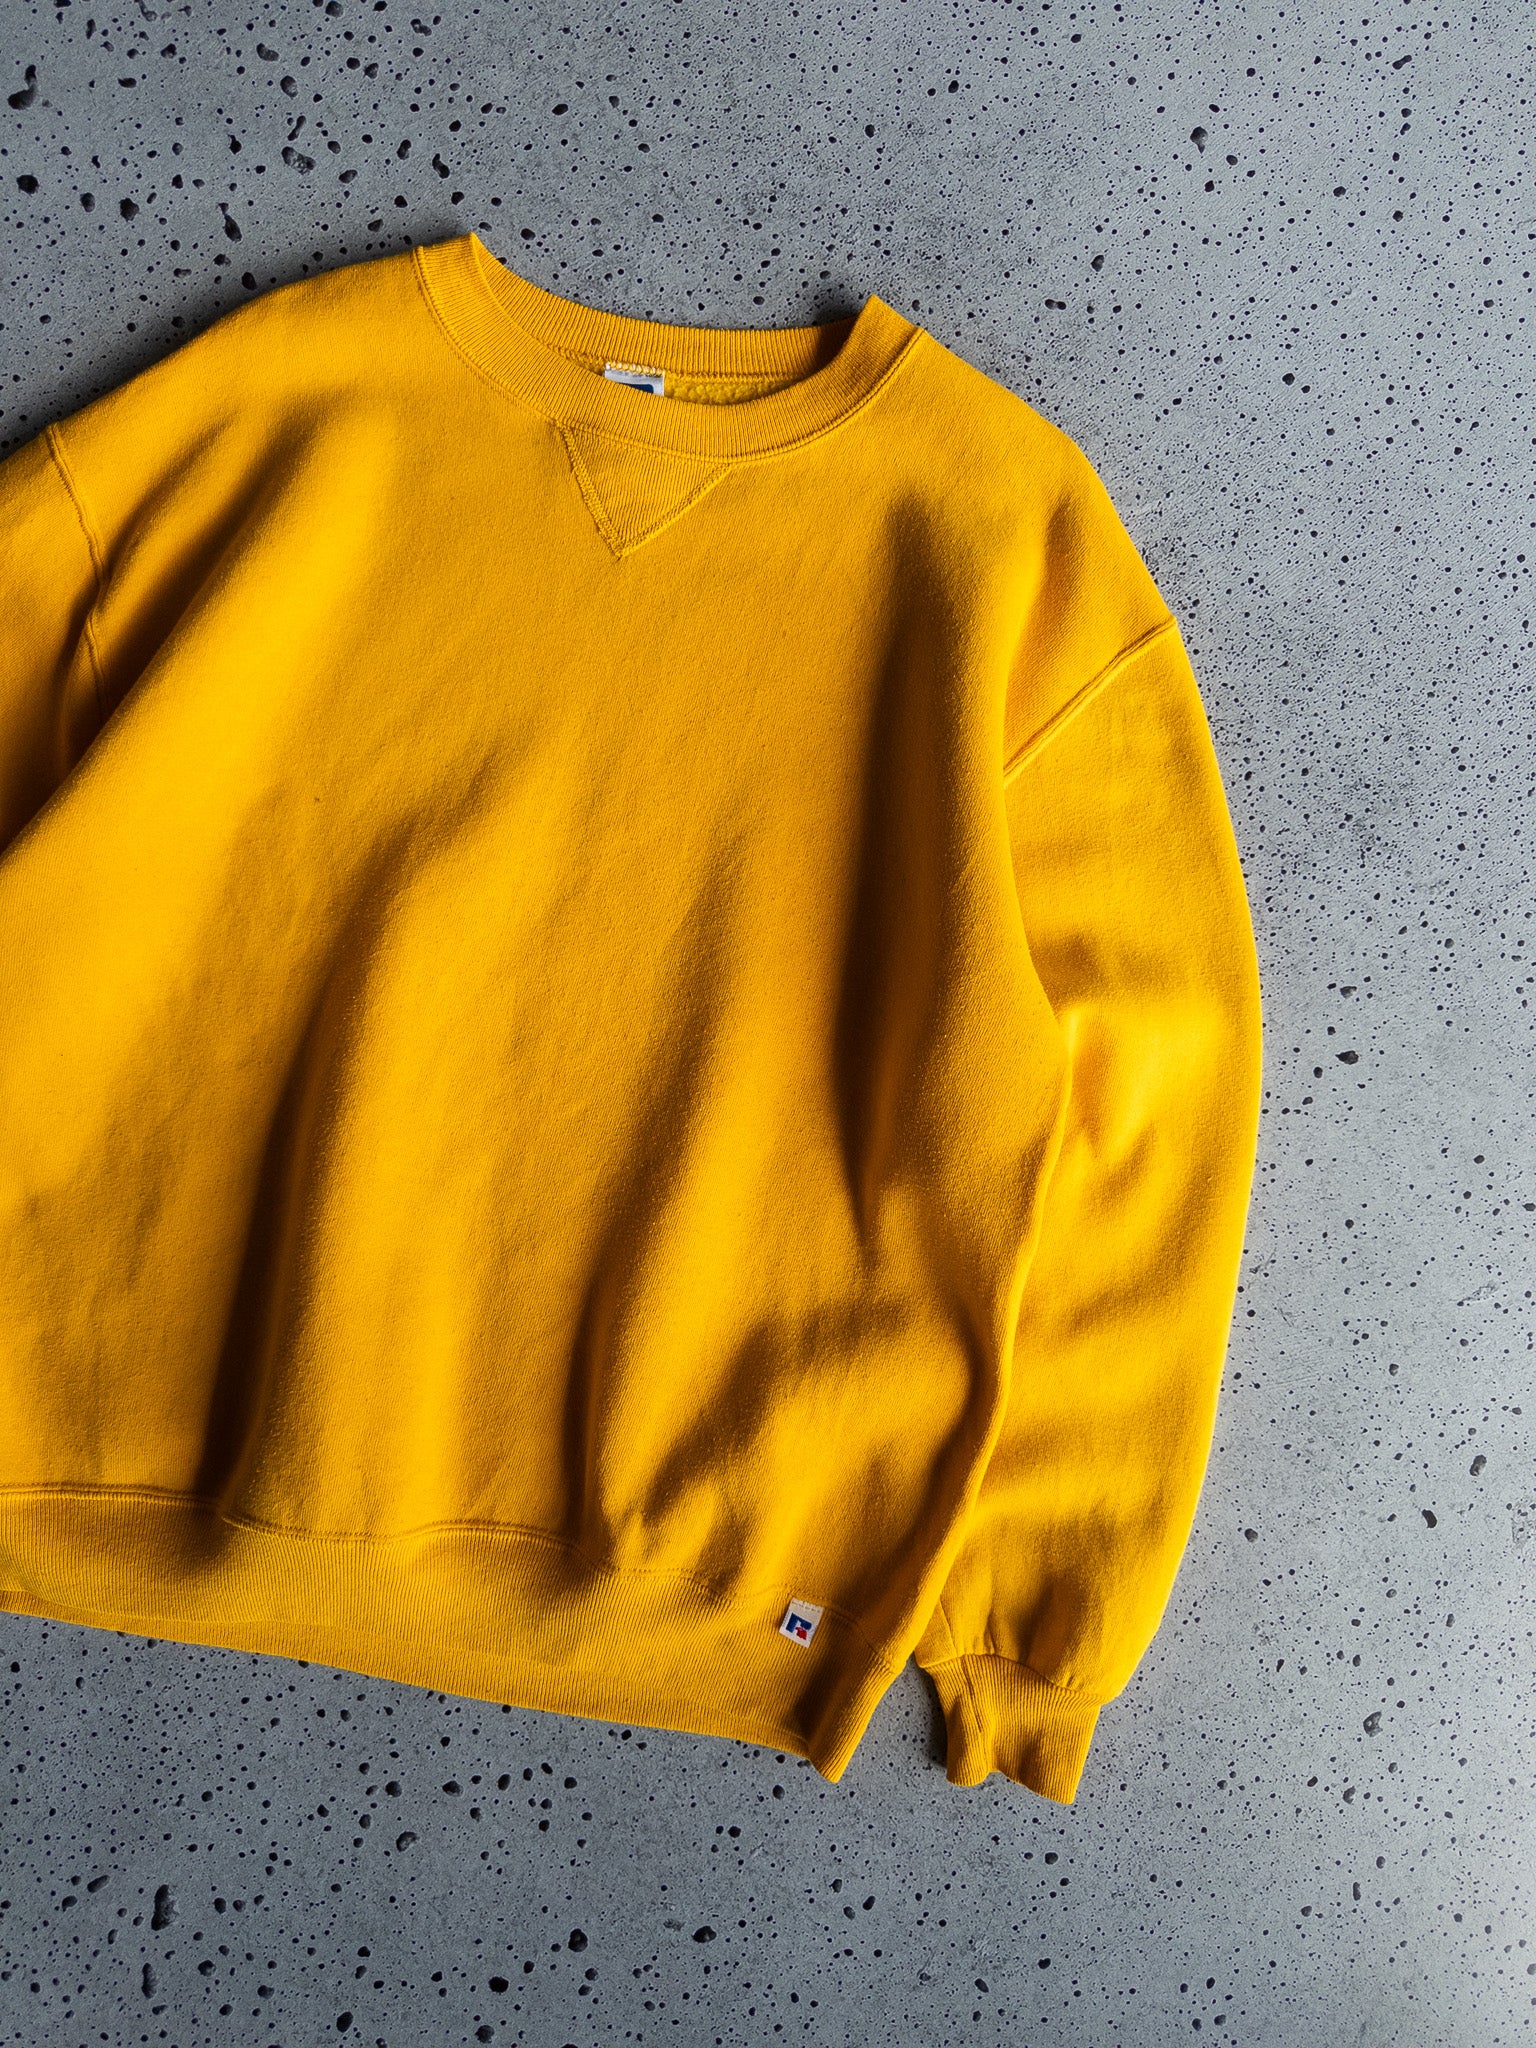 Vintage Russell Sweatshirt (XL)